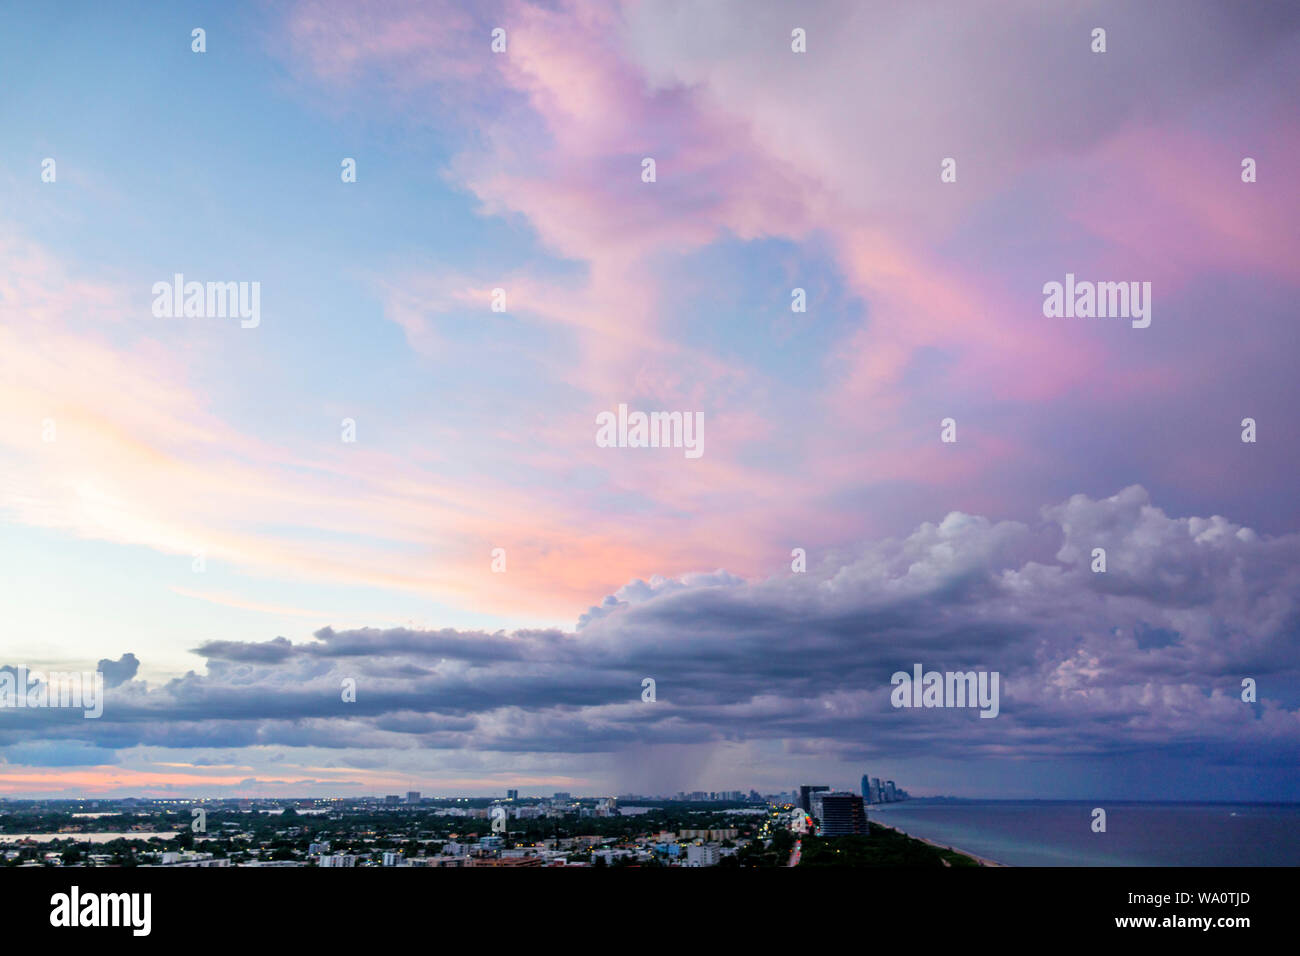 Miami Beach Florida,Oceano Atlantico,nuvole cielo meteo,tramonto,nuvole tempesta,pioggia,FL190731025 Foto Stock